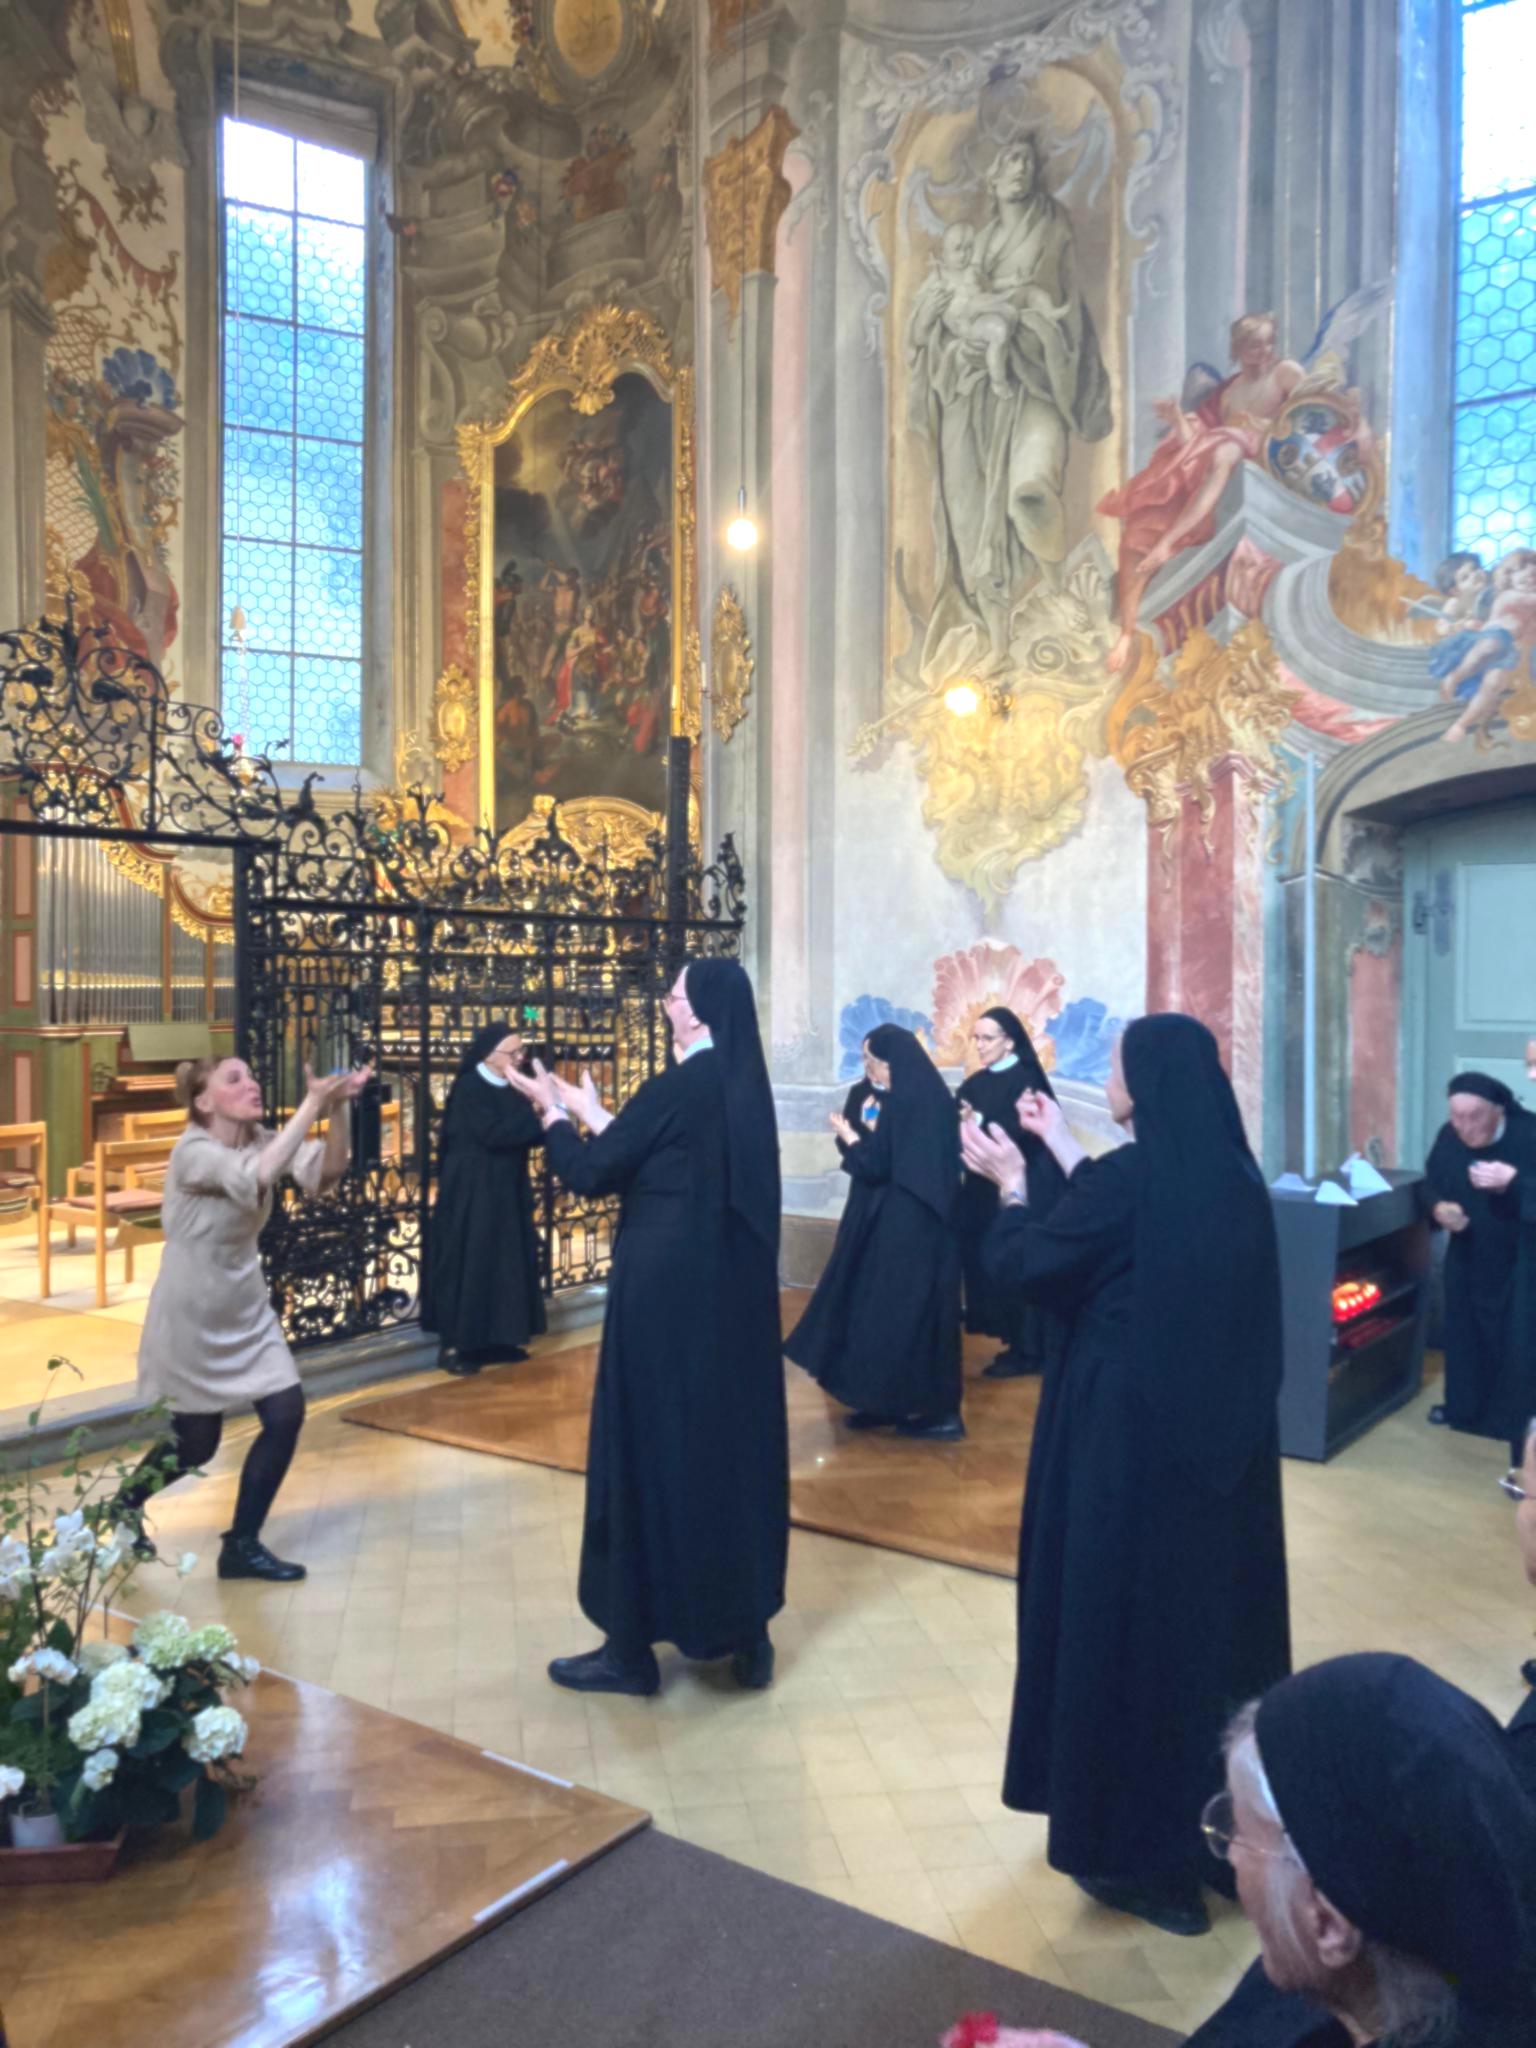 Featherflight dance meditation with nuns, Kloster Fahr CH